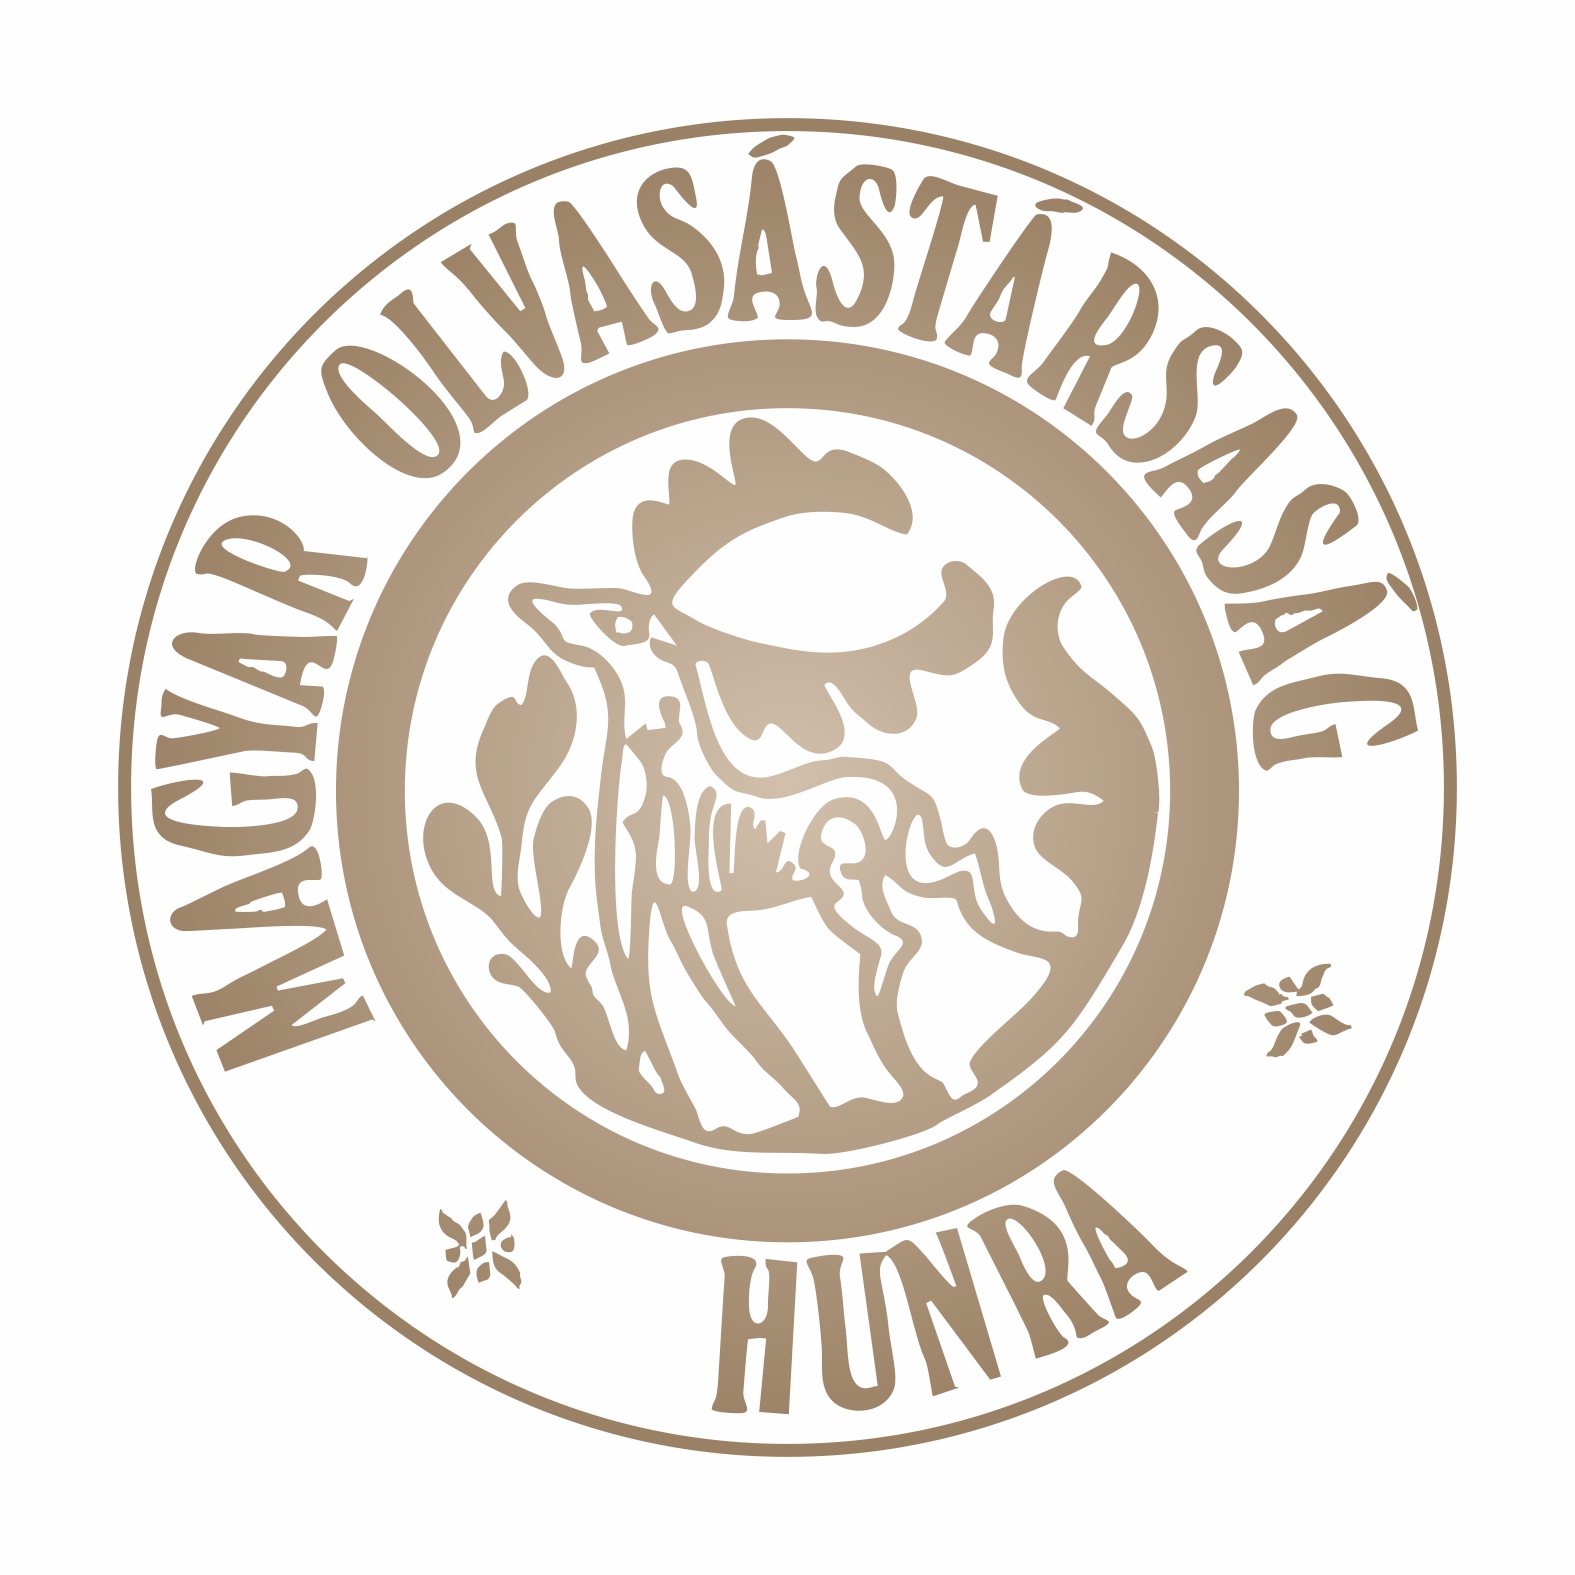 HUNRA – Hungarian Reading Association